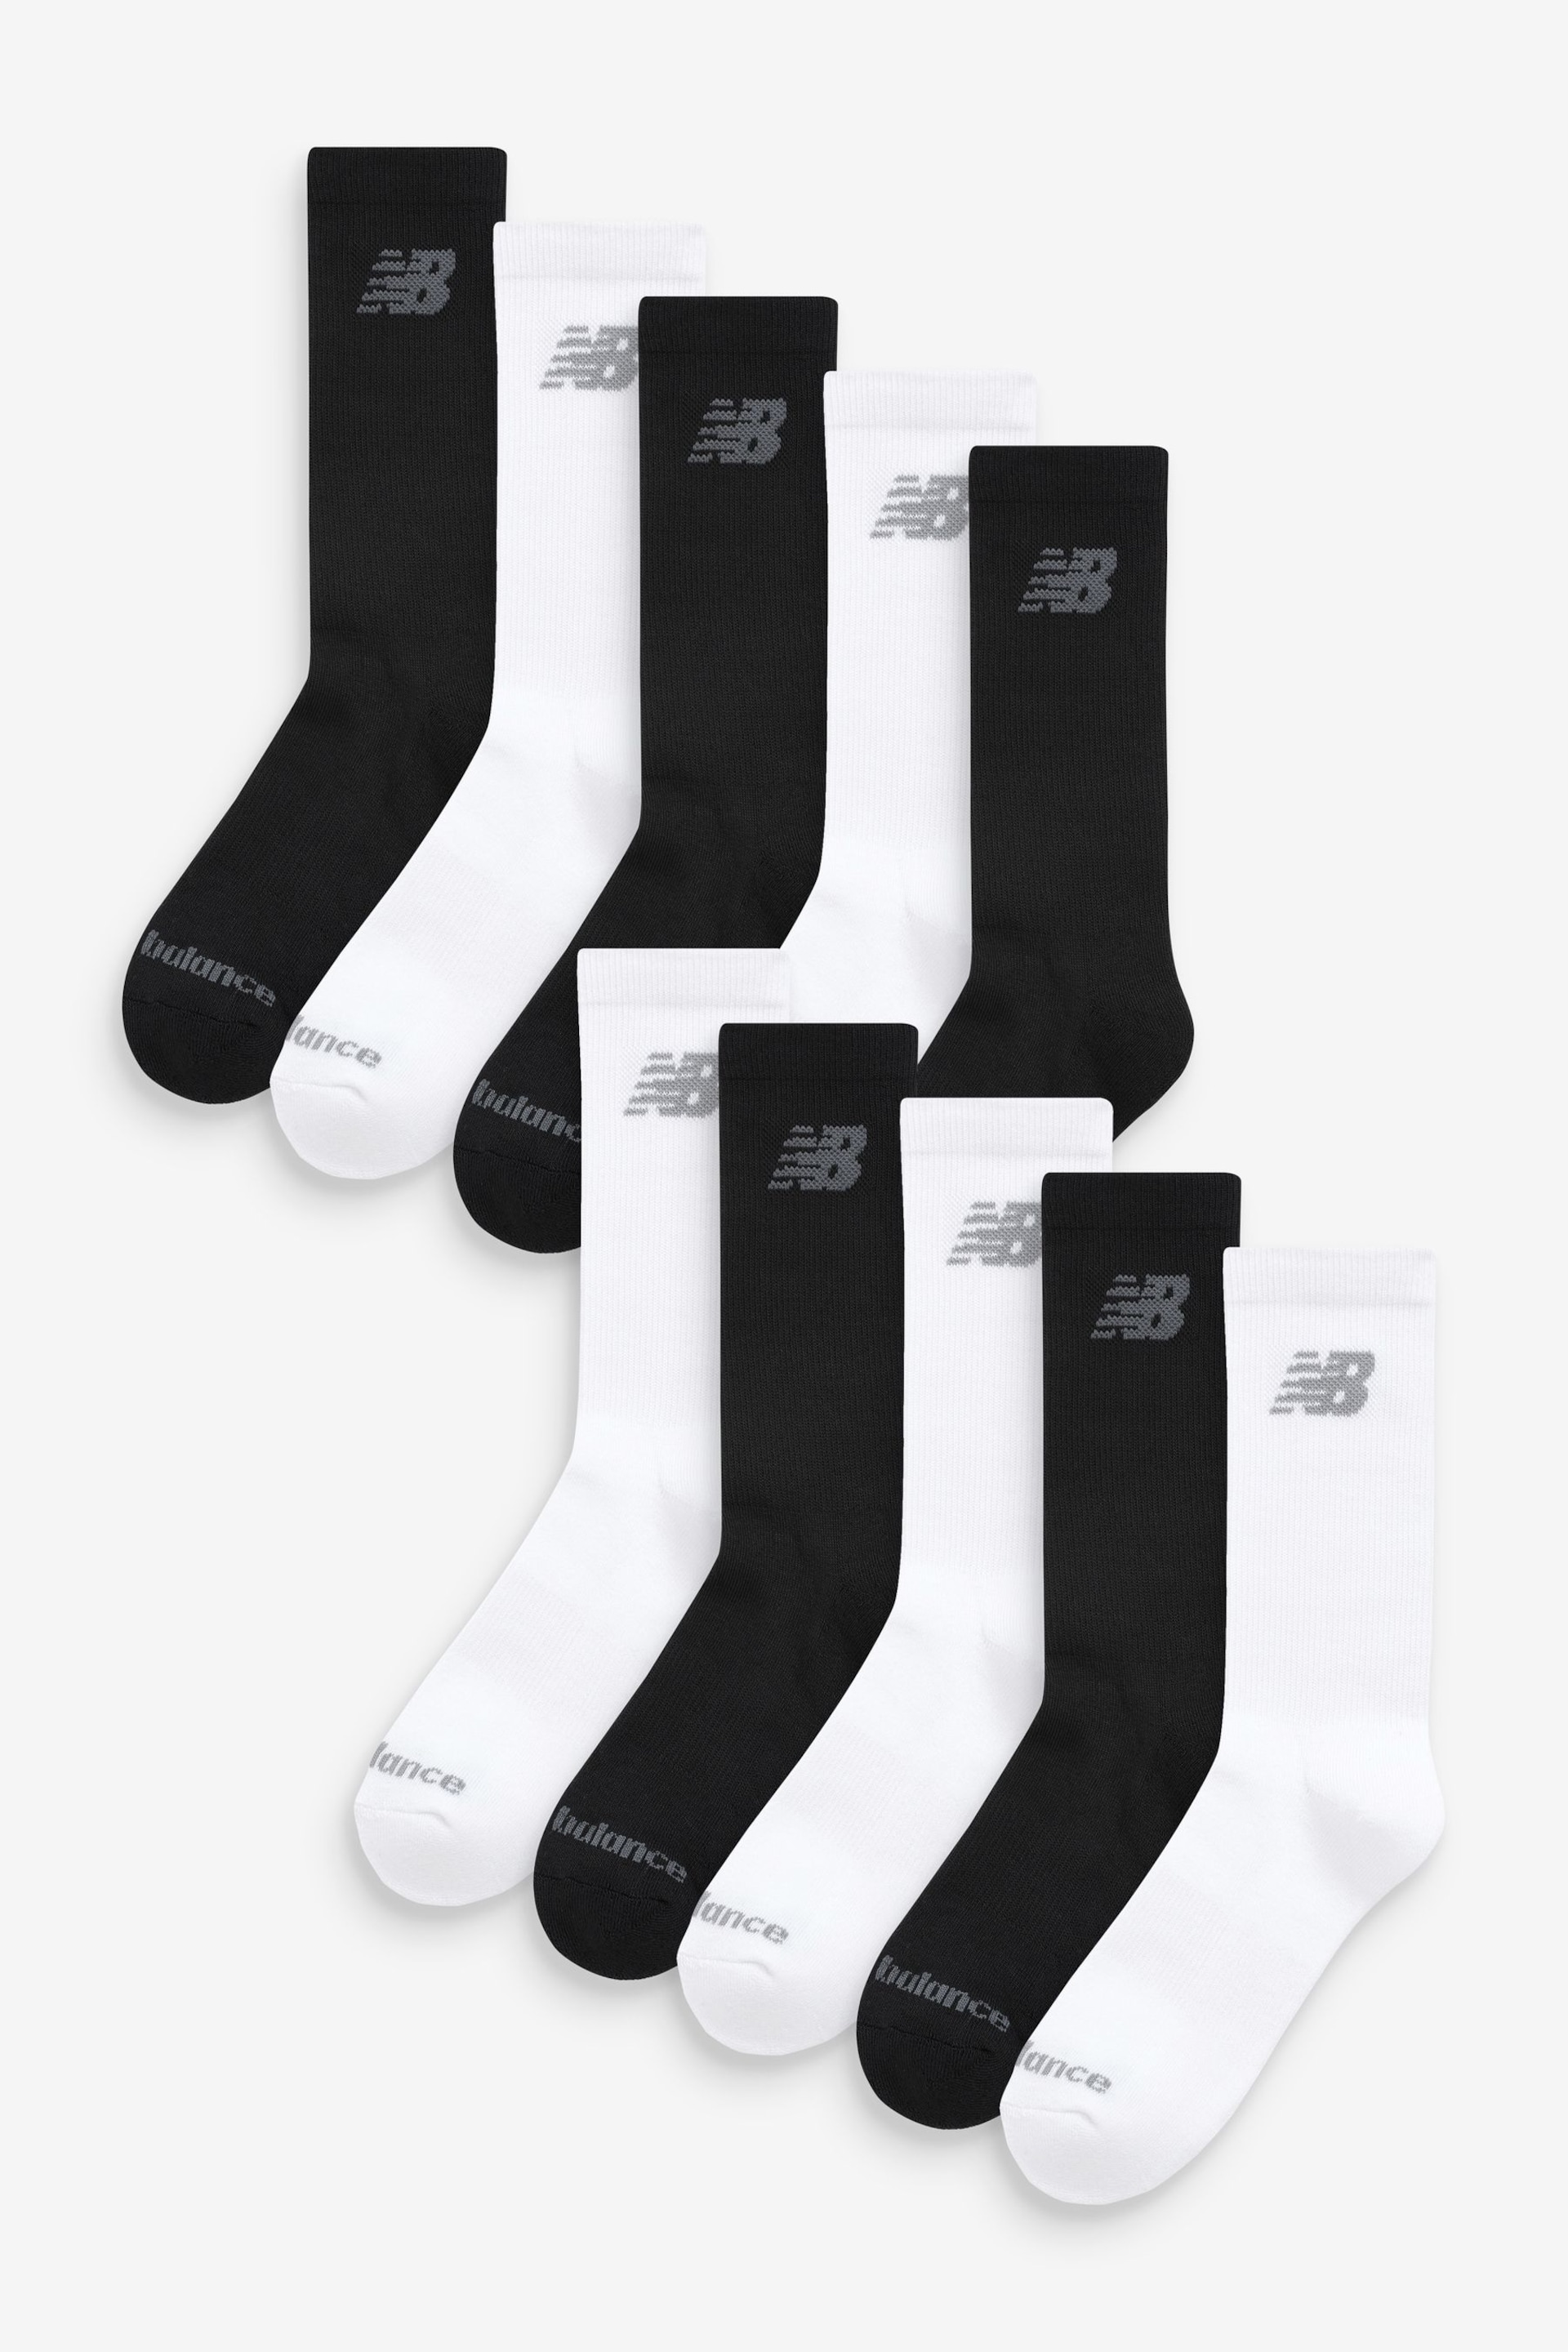 New Balance White of Crew Socks 10 Pack - Image 1 of 3